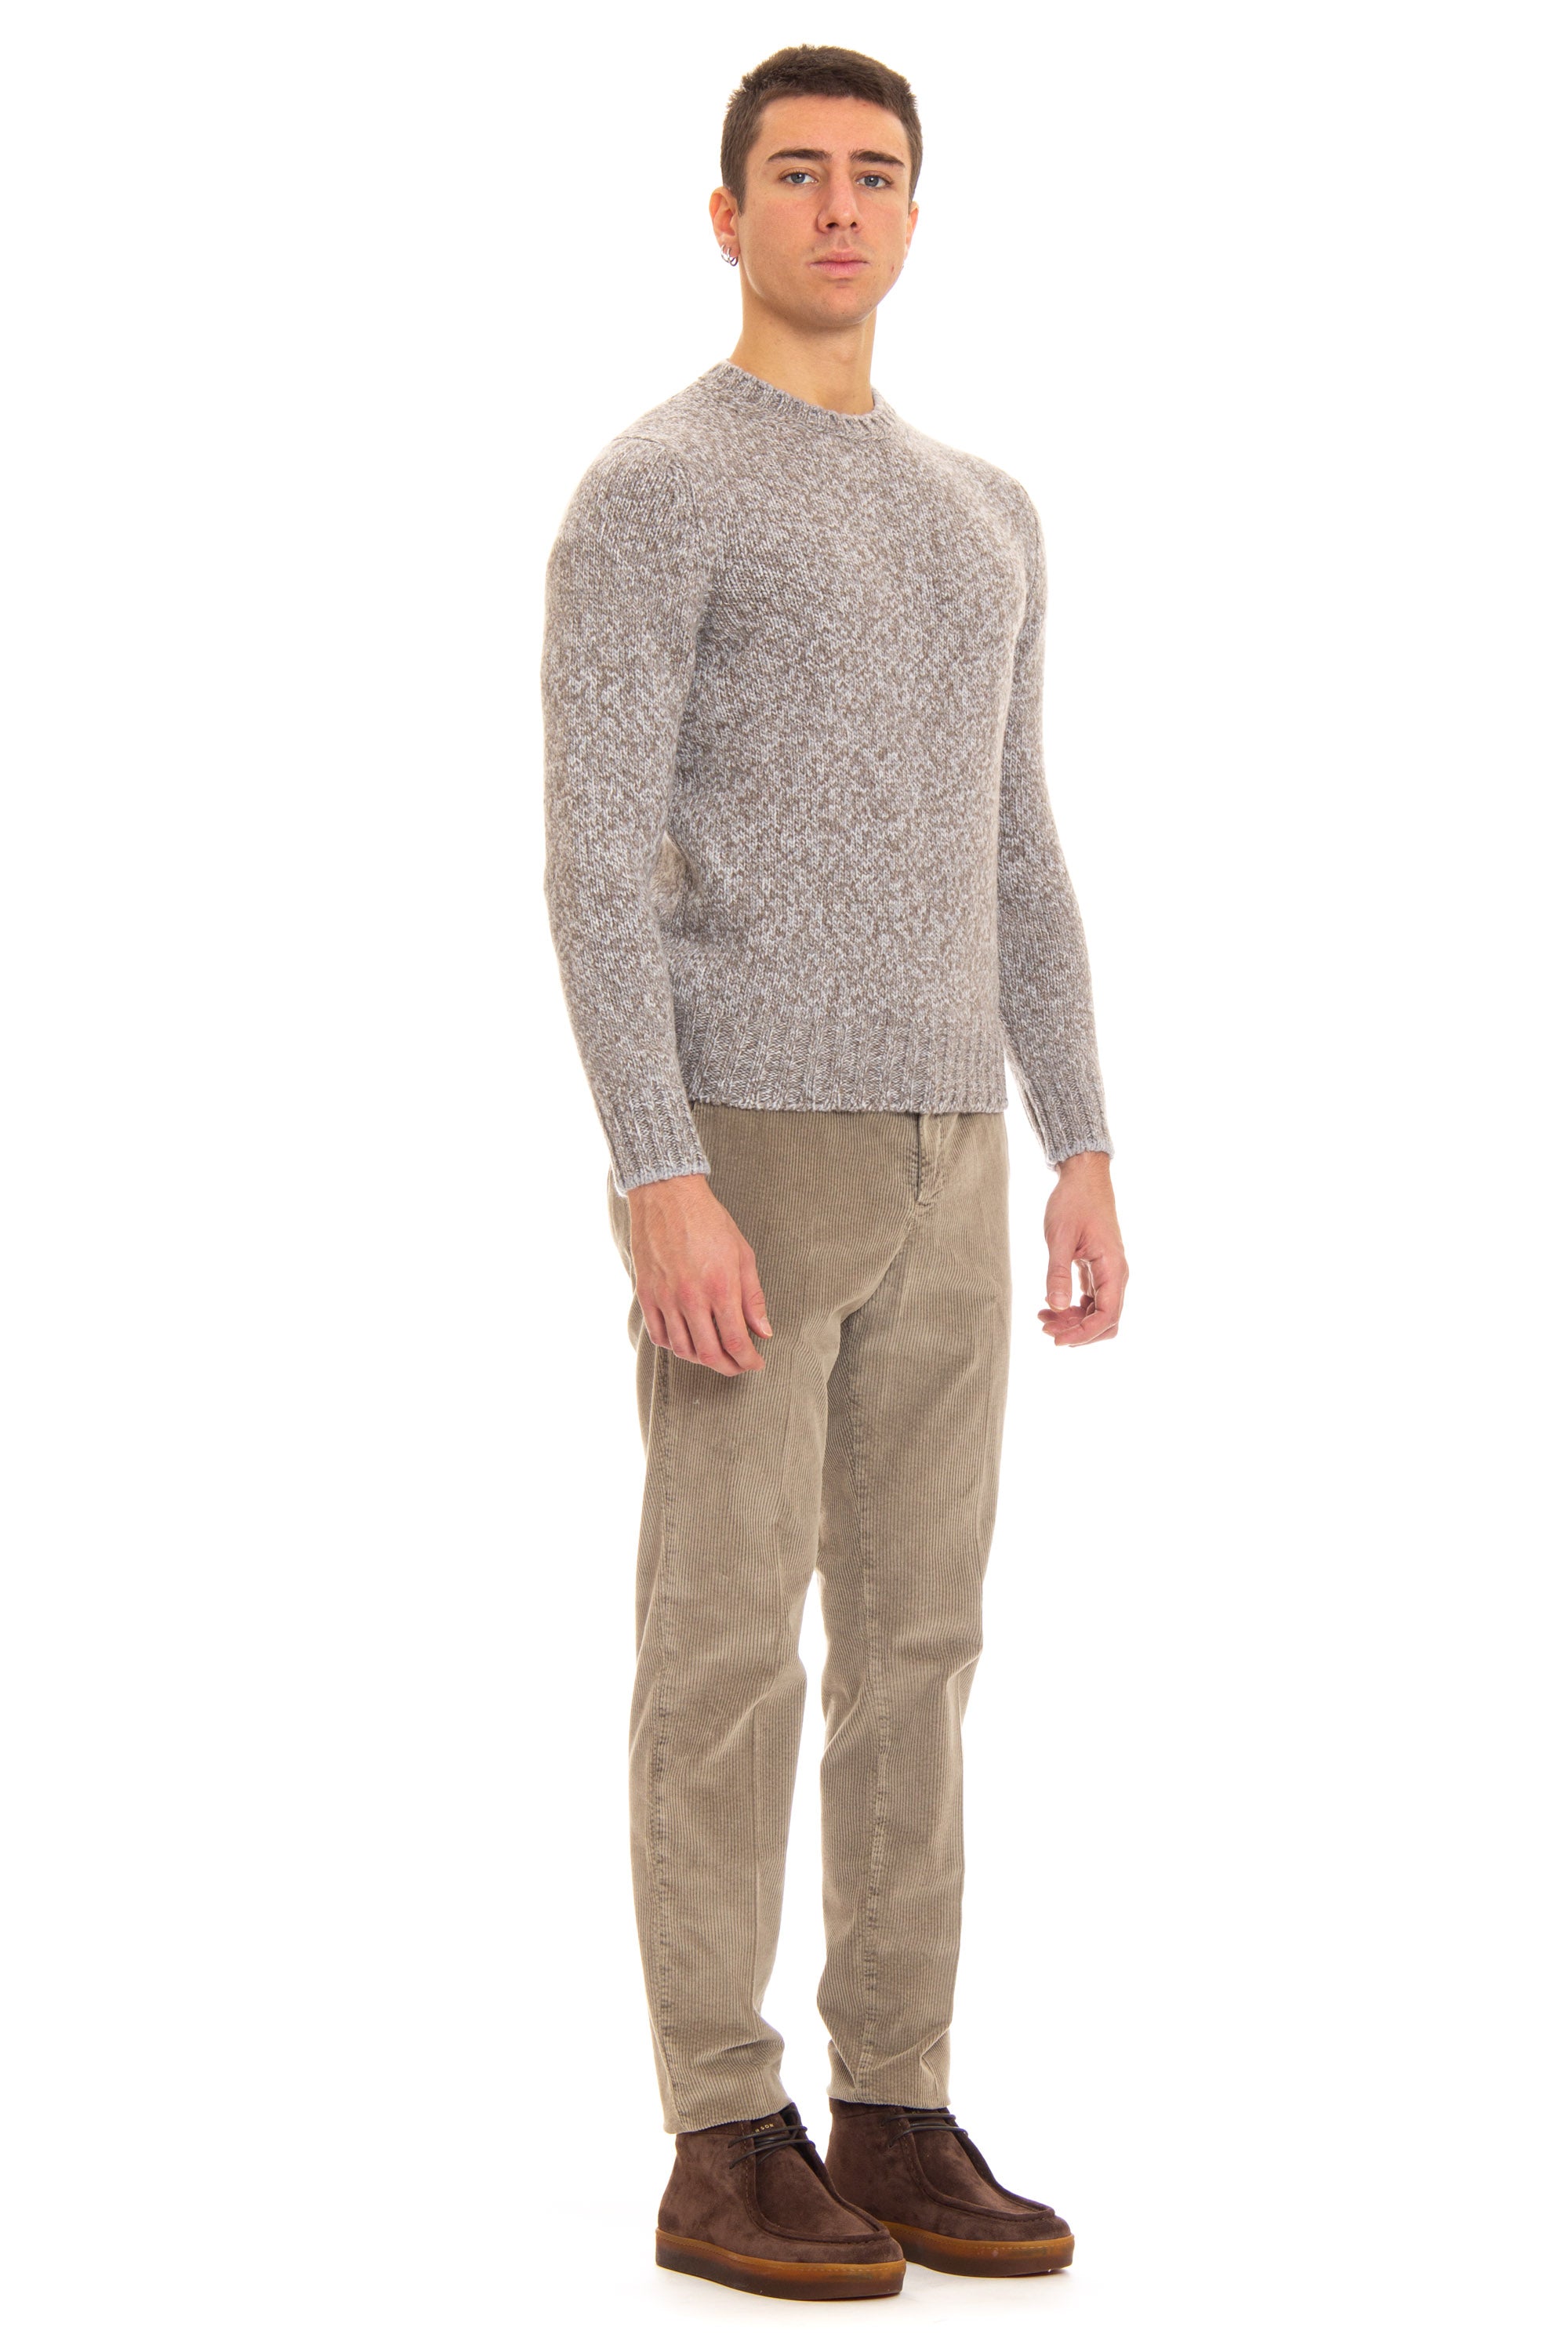 Mouline' virgin wool crew-neck sweater